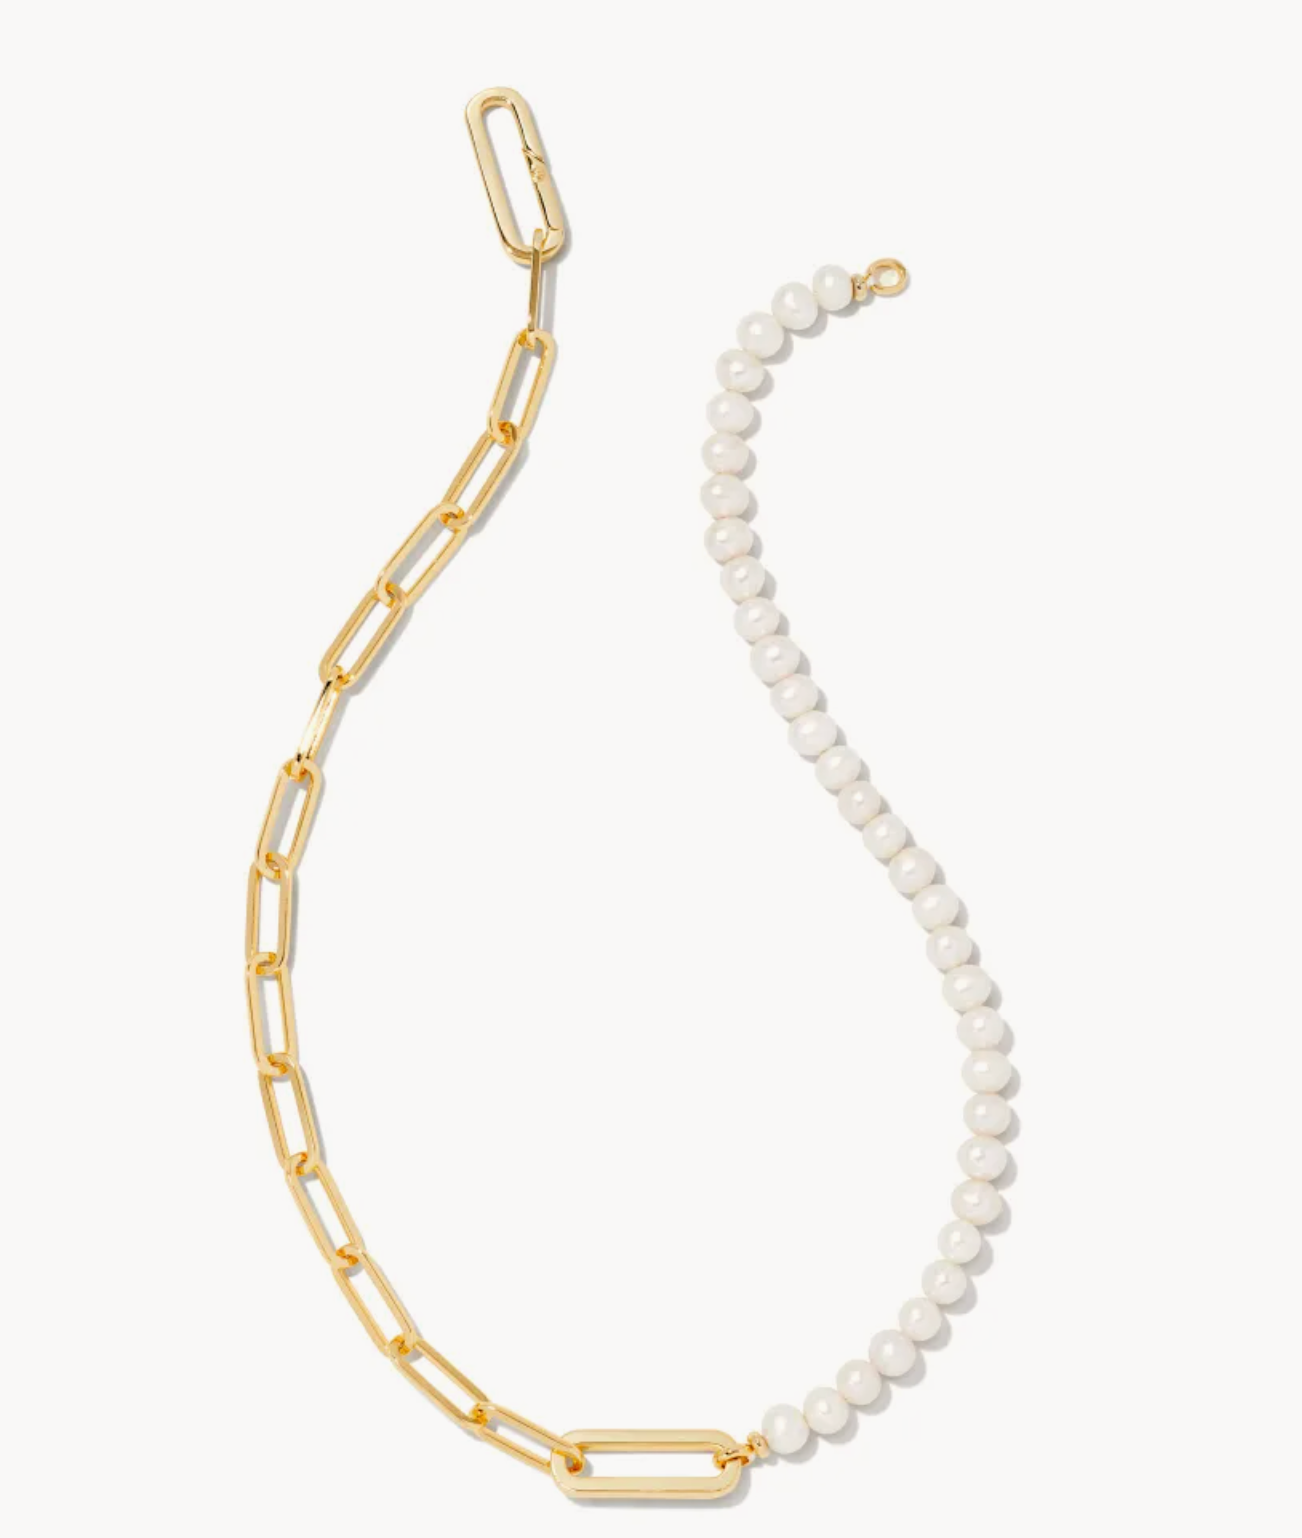 Kendra Scott Ashton Gold Half Chain Necklace in White Pearl